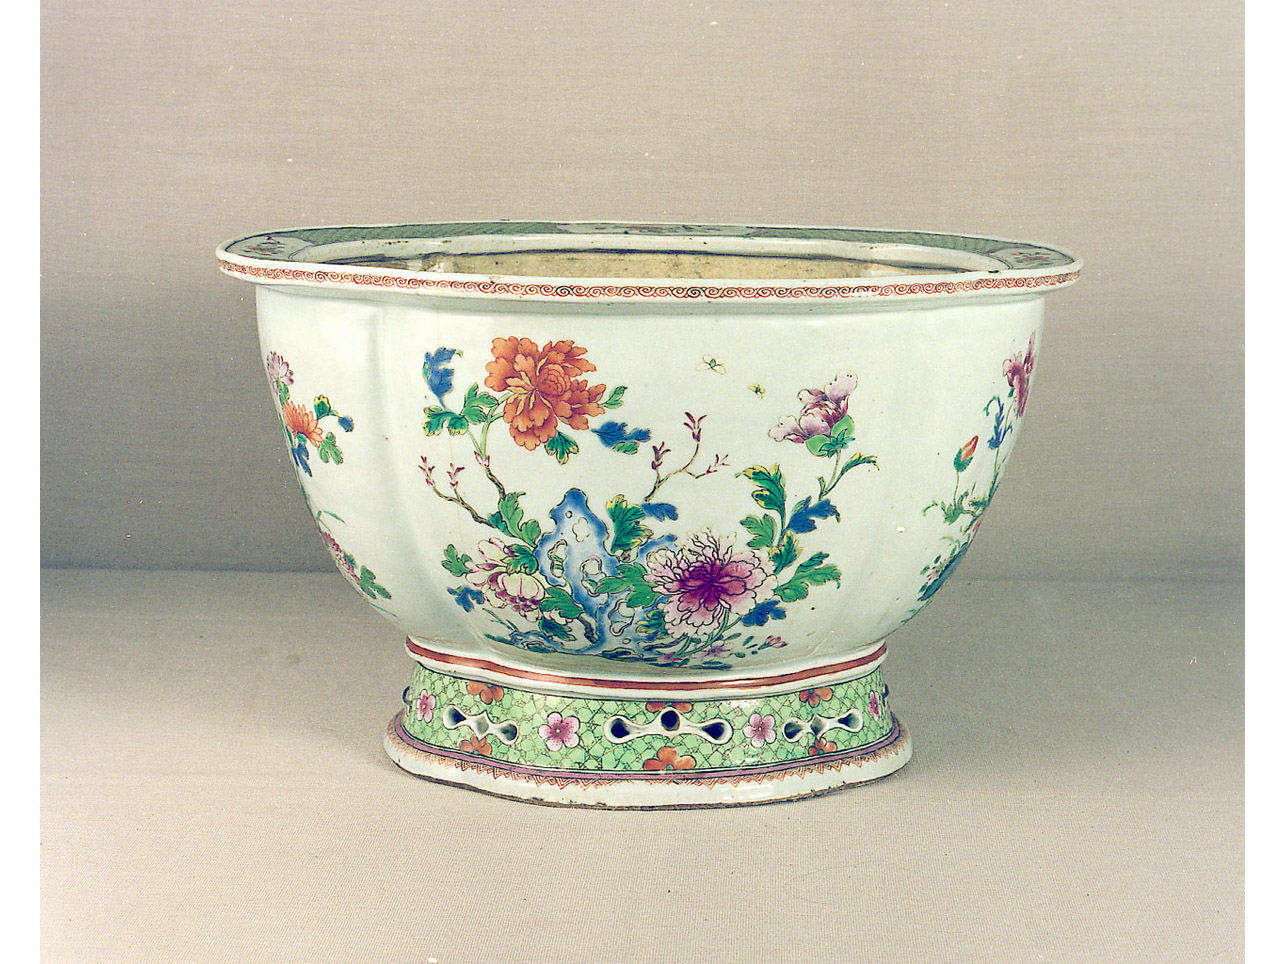 motivi decorativi floreali (cachepot) - manifattura cinese (sec. XVIII)